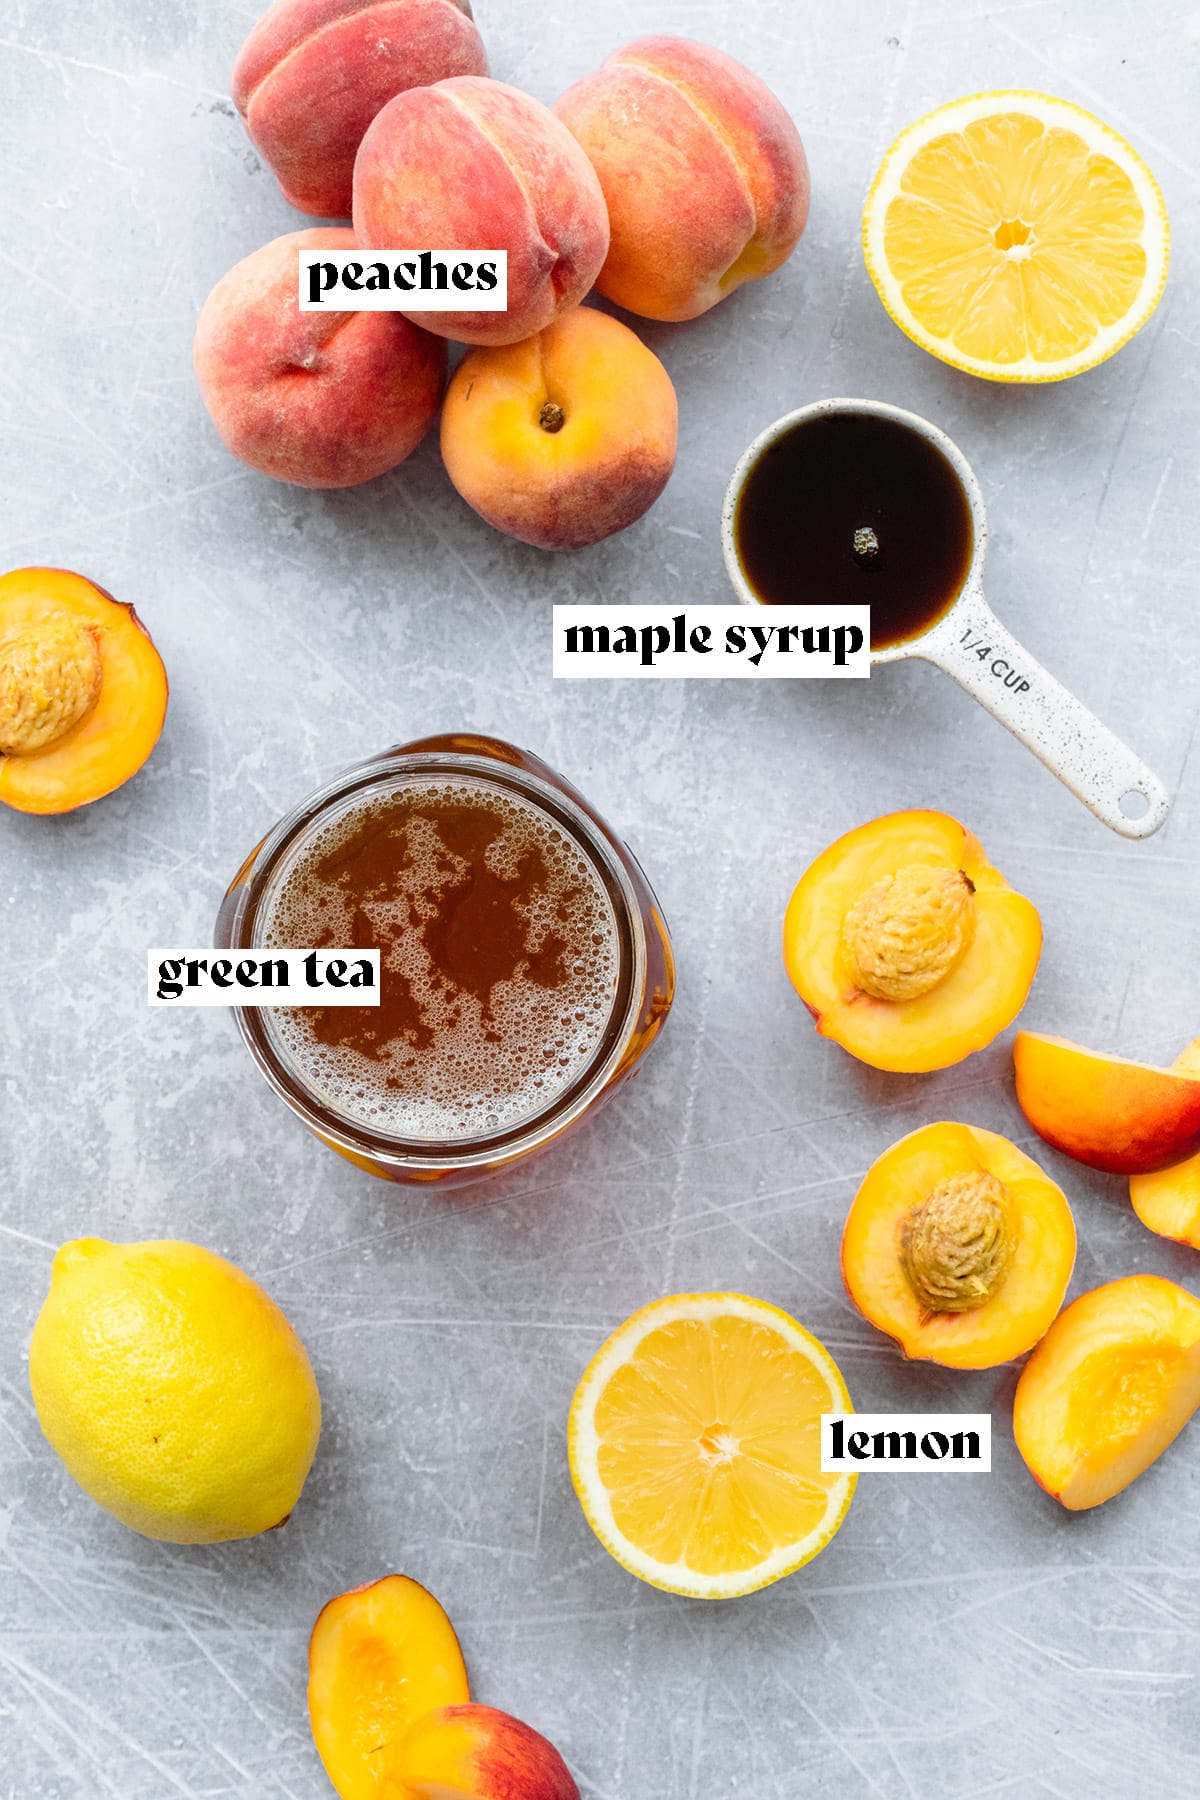 https://thehealthfulideas.com/wp-content/uploads/2021/08/Iced-Peach-Green-Tea-Lemonade-ingredients.jpg